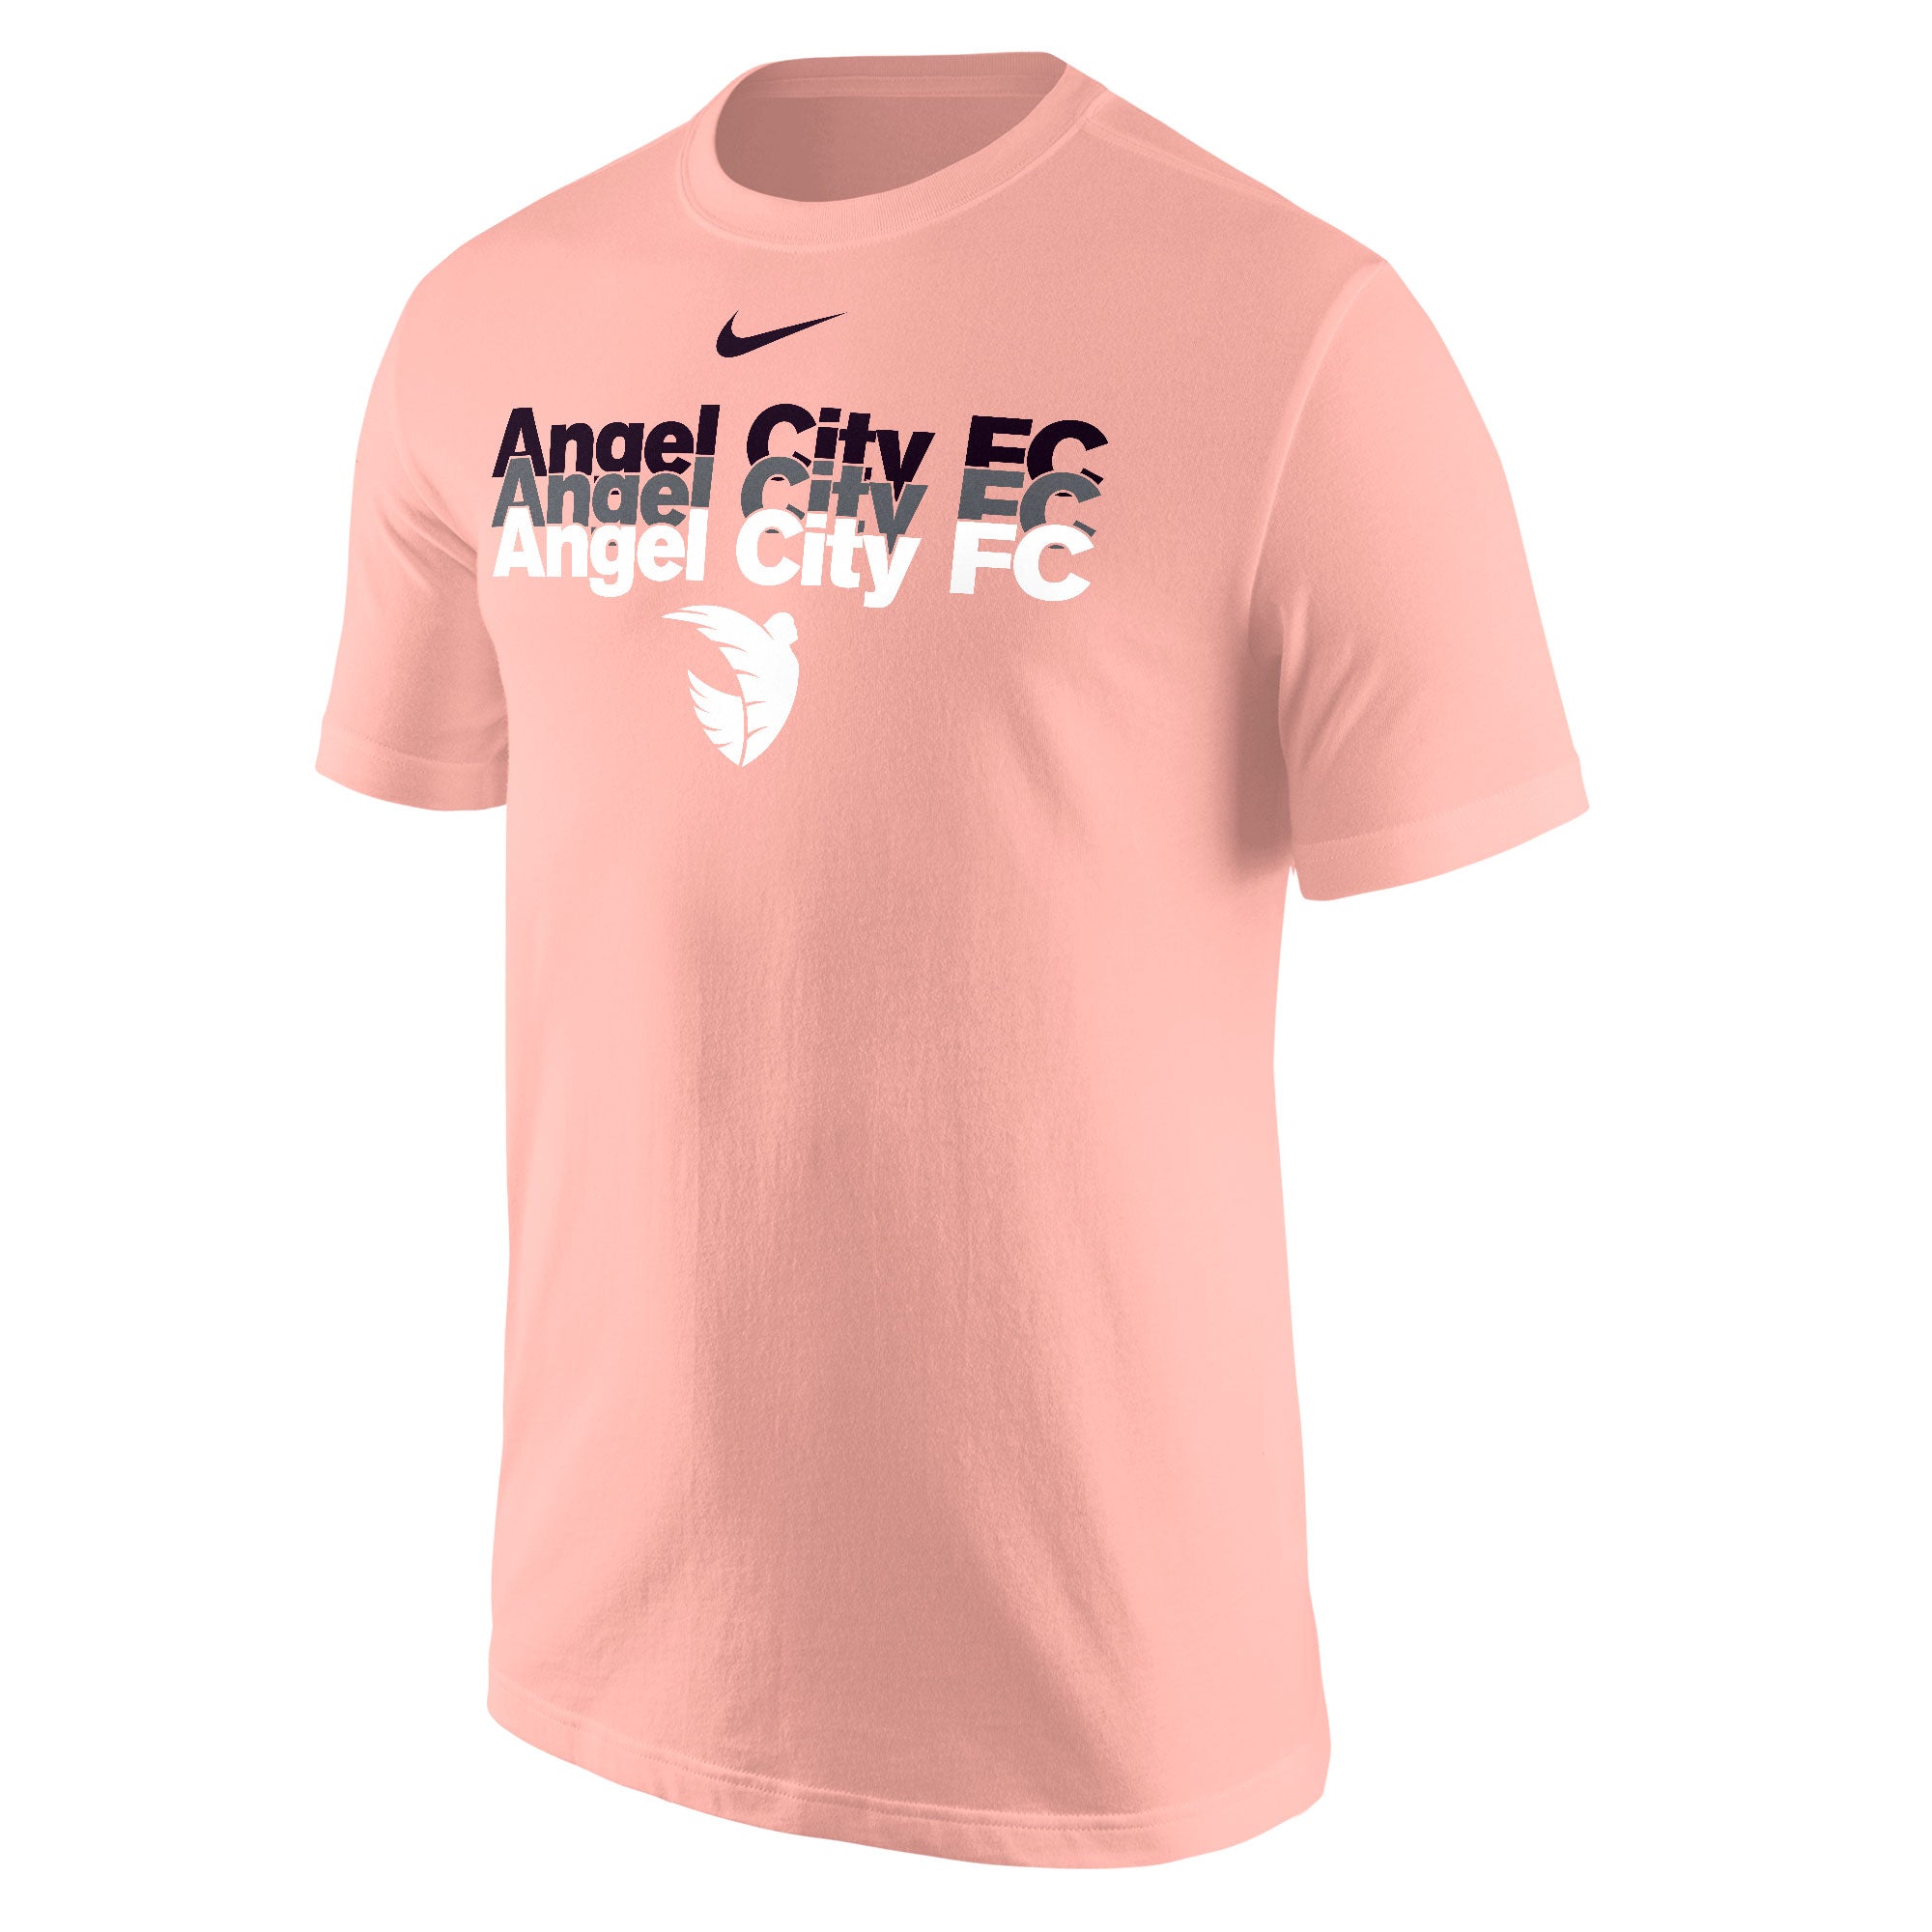 AngelCityFCNikeUnisexRepeatSolRosaShortSleeveT-Shirt.jpg